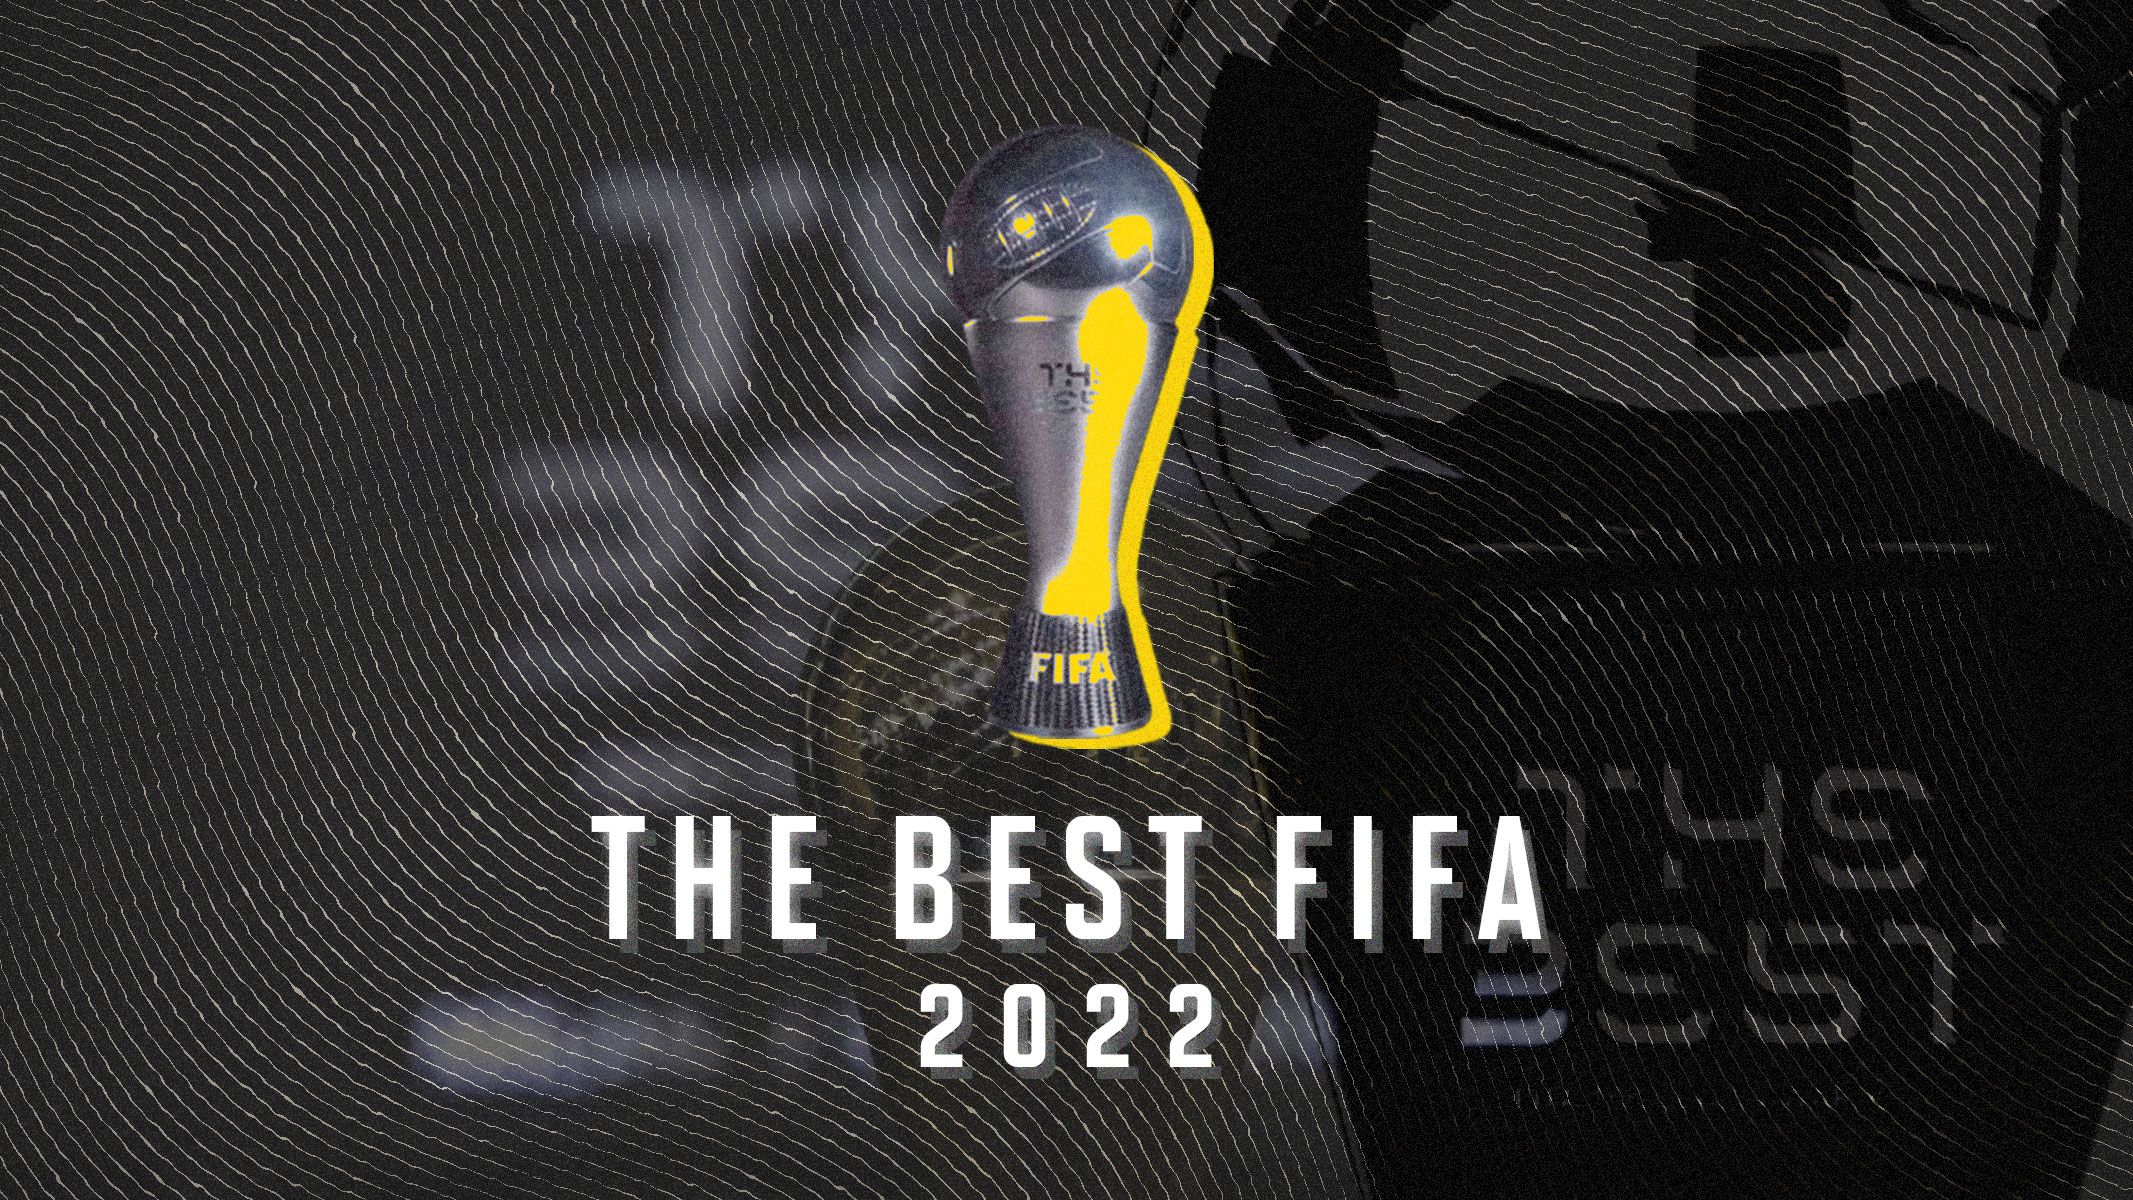 Diserang usai Pilih Lionel Messi di The Best FIFA 2022, David Alaba Klarifikasi